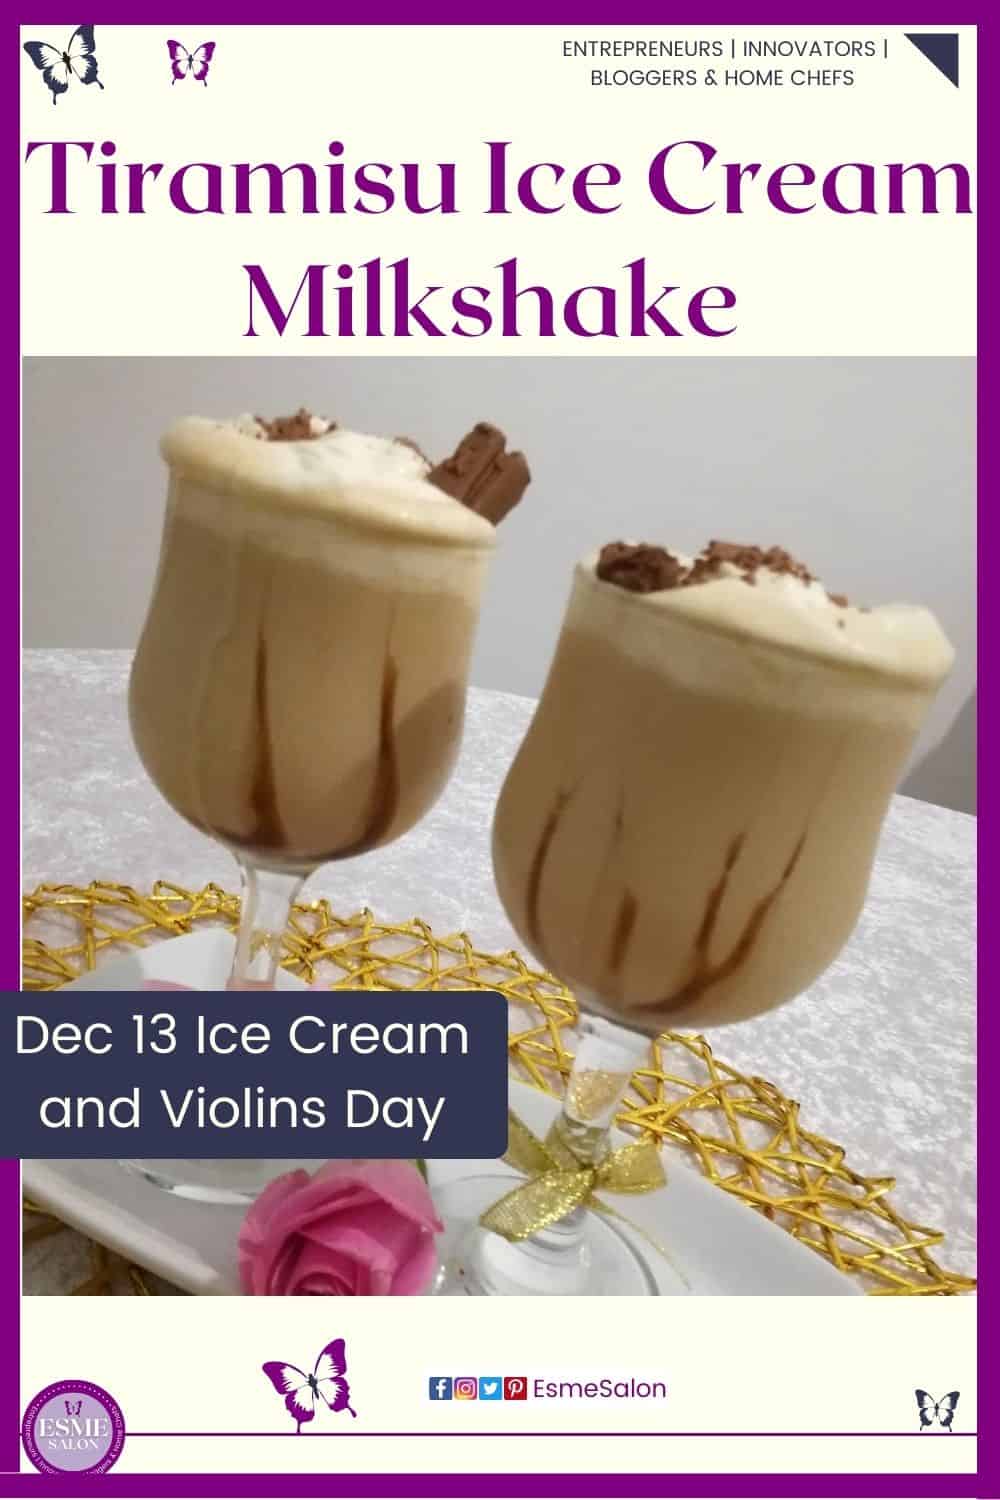 an image of 2 long stem glasses filled with Tiramisu Ice Cream Milkshake